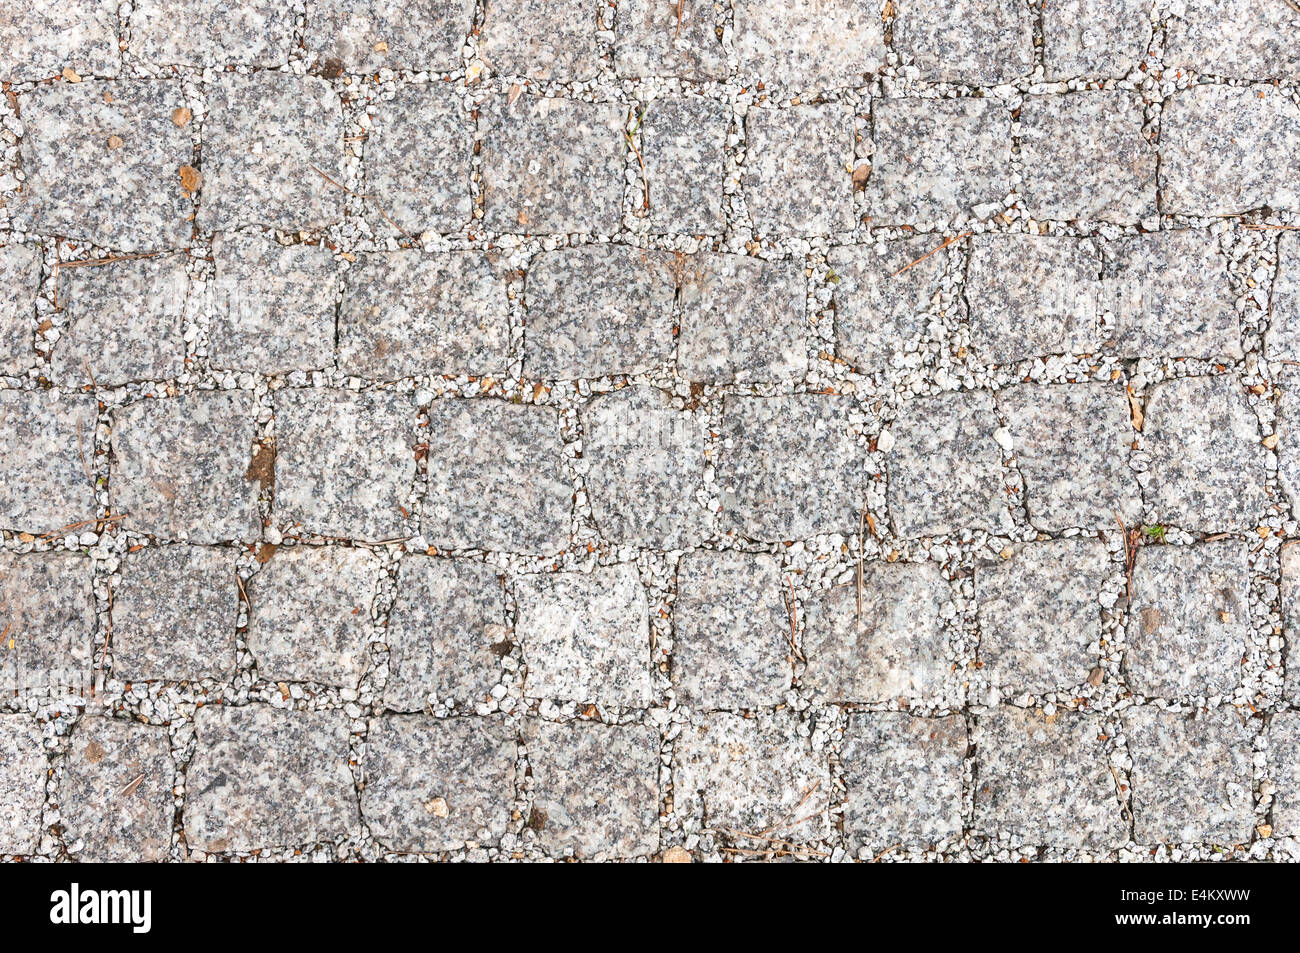 Sett ladrillos grises, textura o fondo, el pavimento. Foto de stock